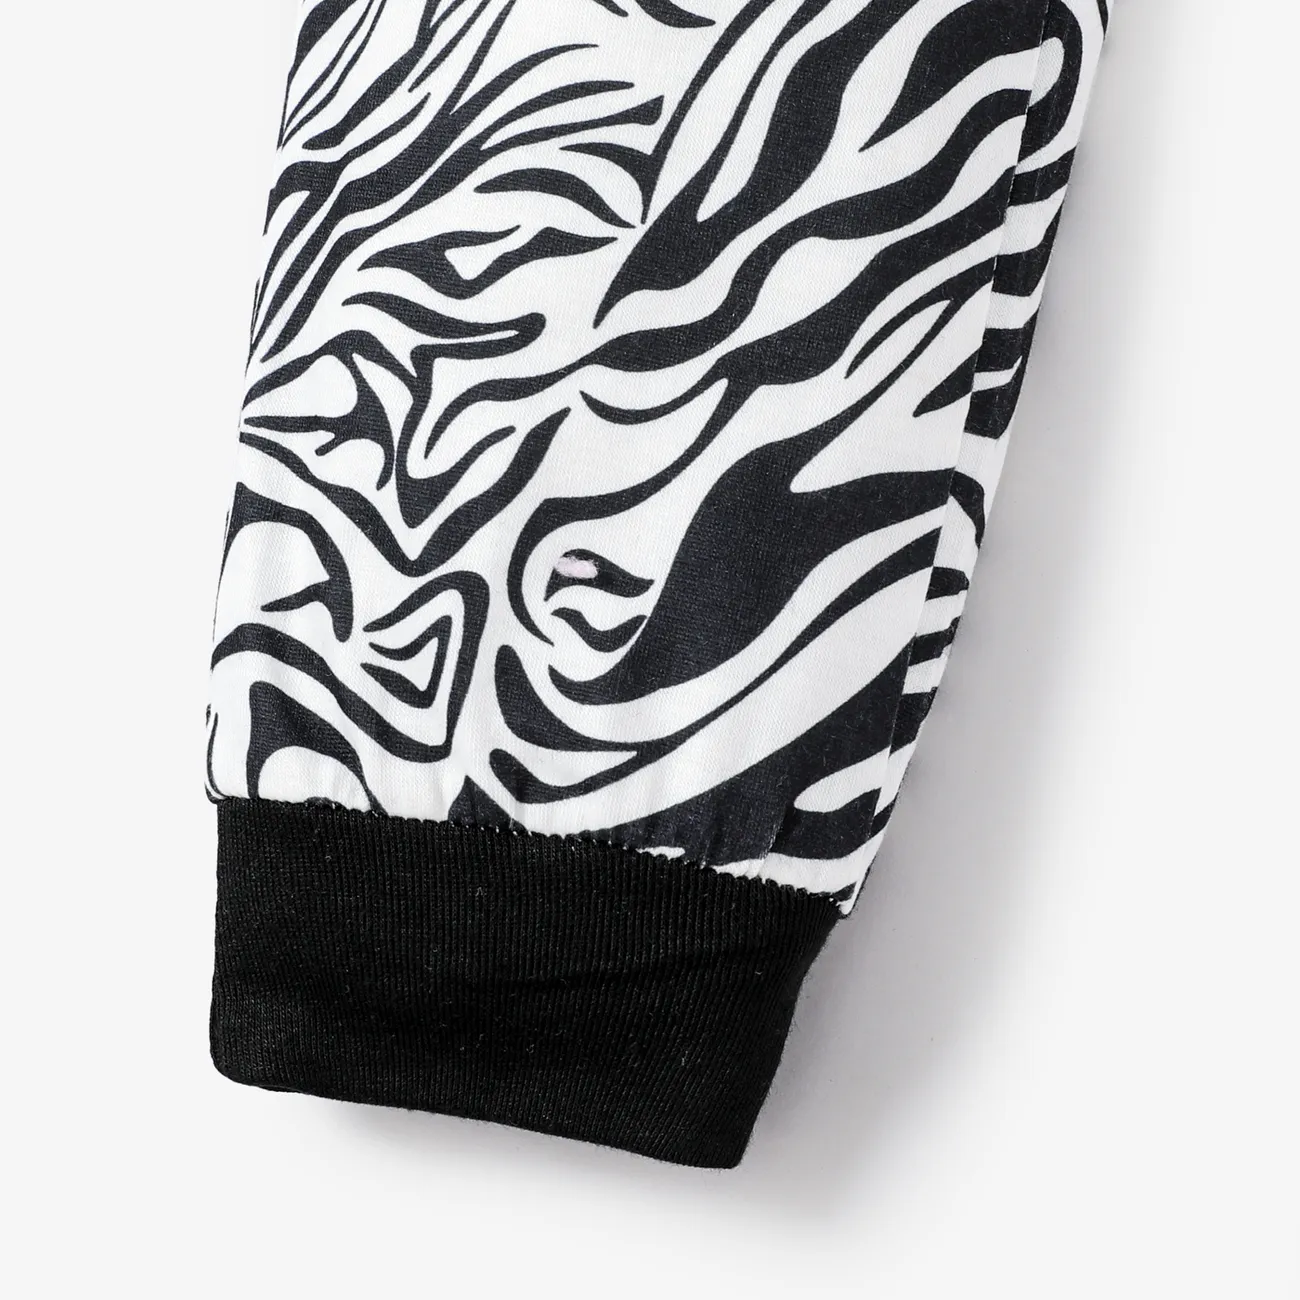 2pcs Kid Girl Zebra Animal Print Casual Pyjama Set rosa big image 1